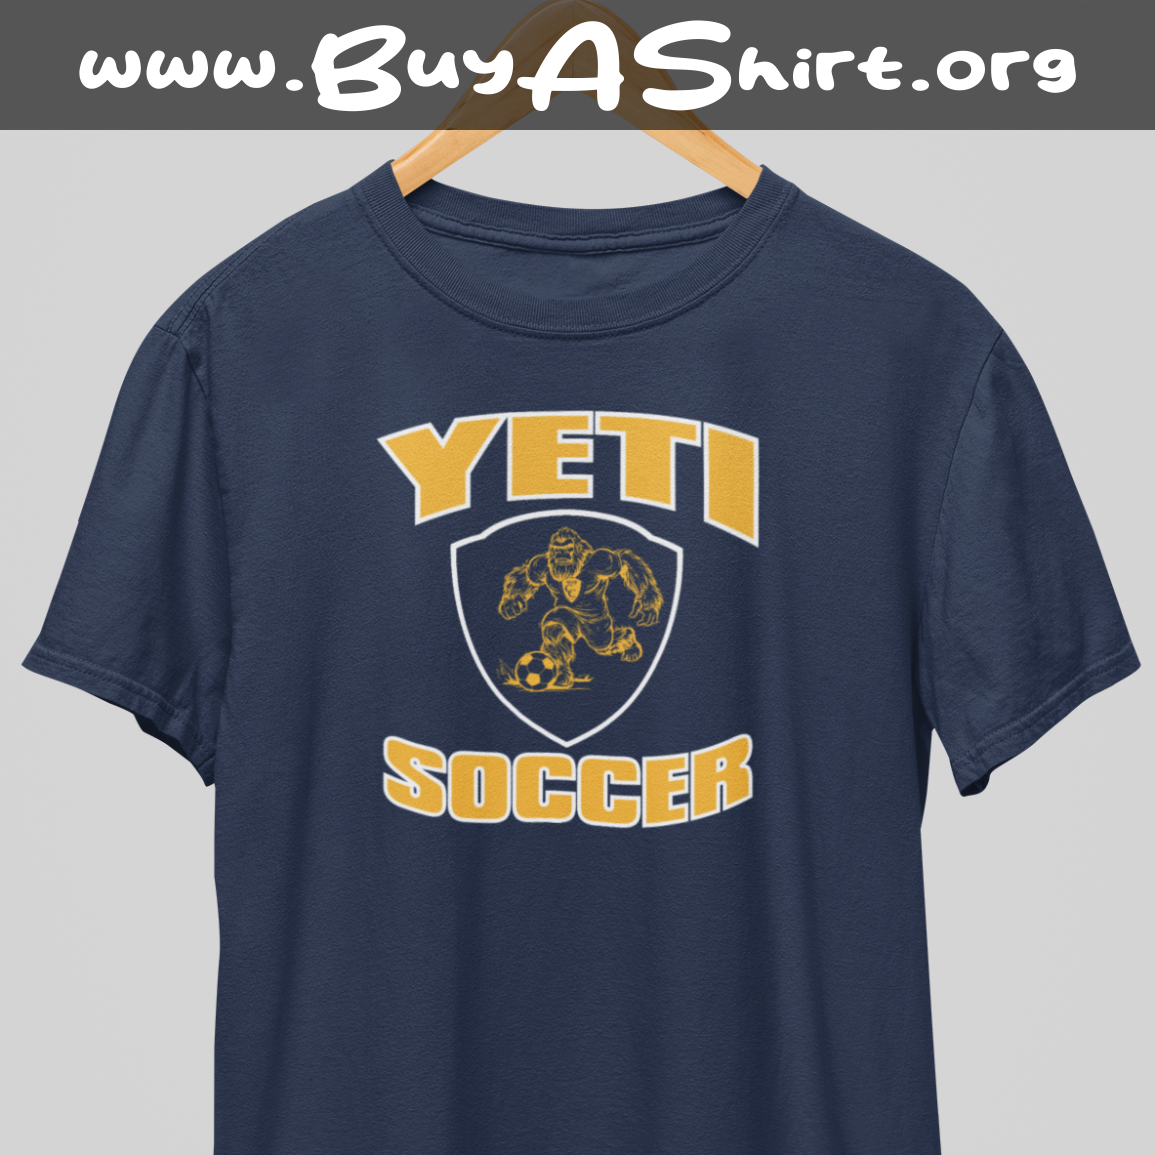 Yeti Soccer Navy Blue T-Shirt